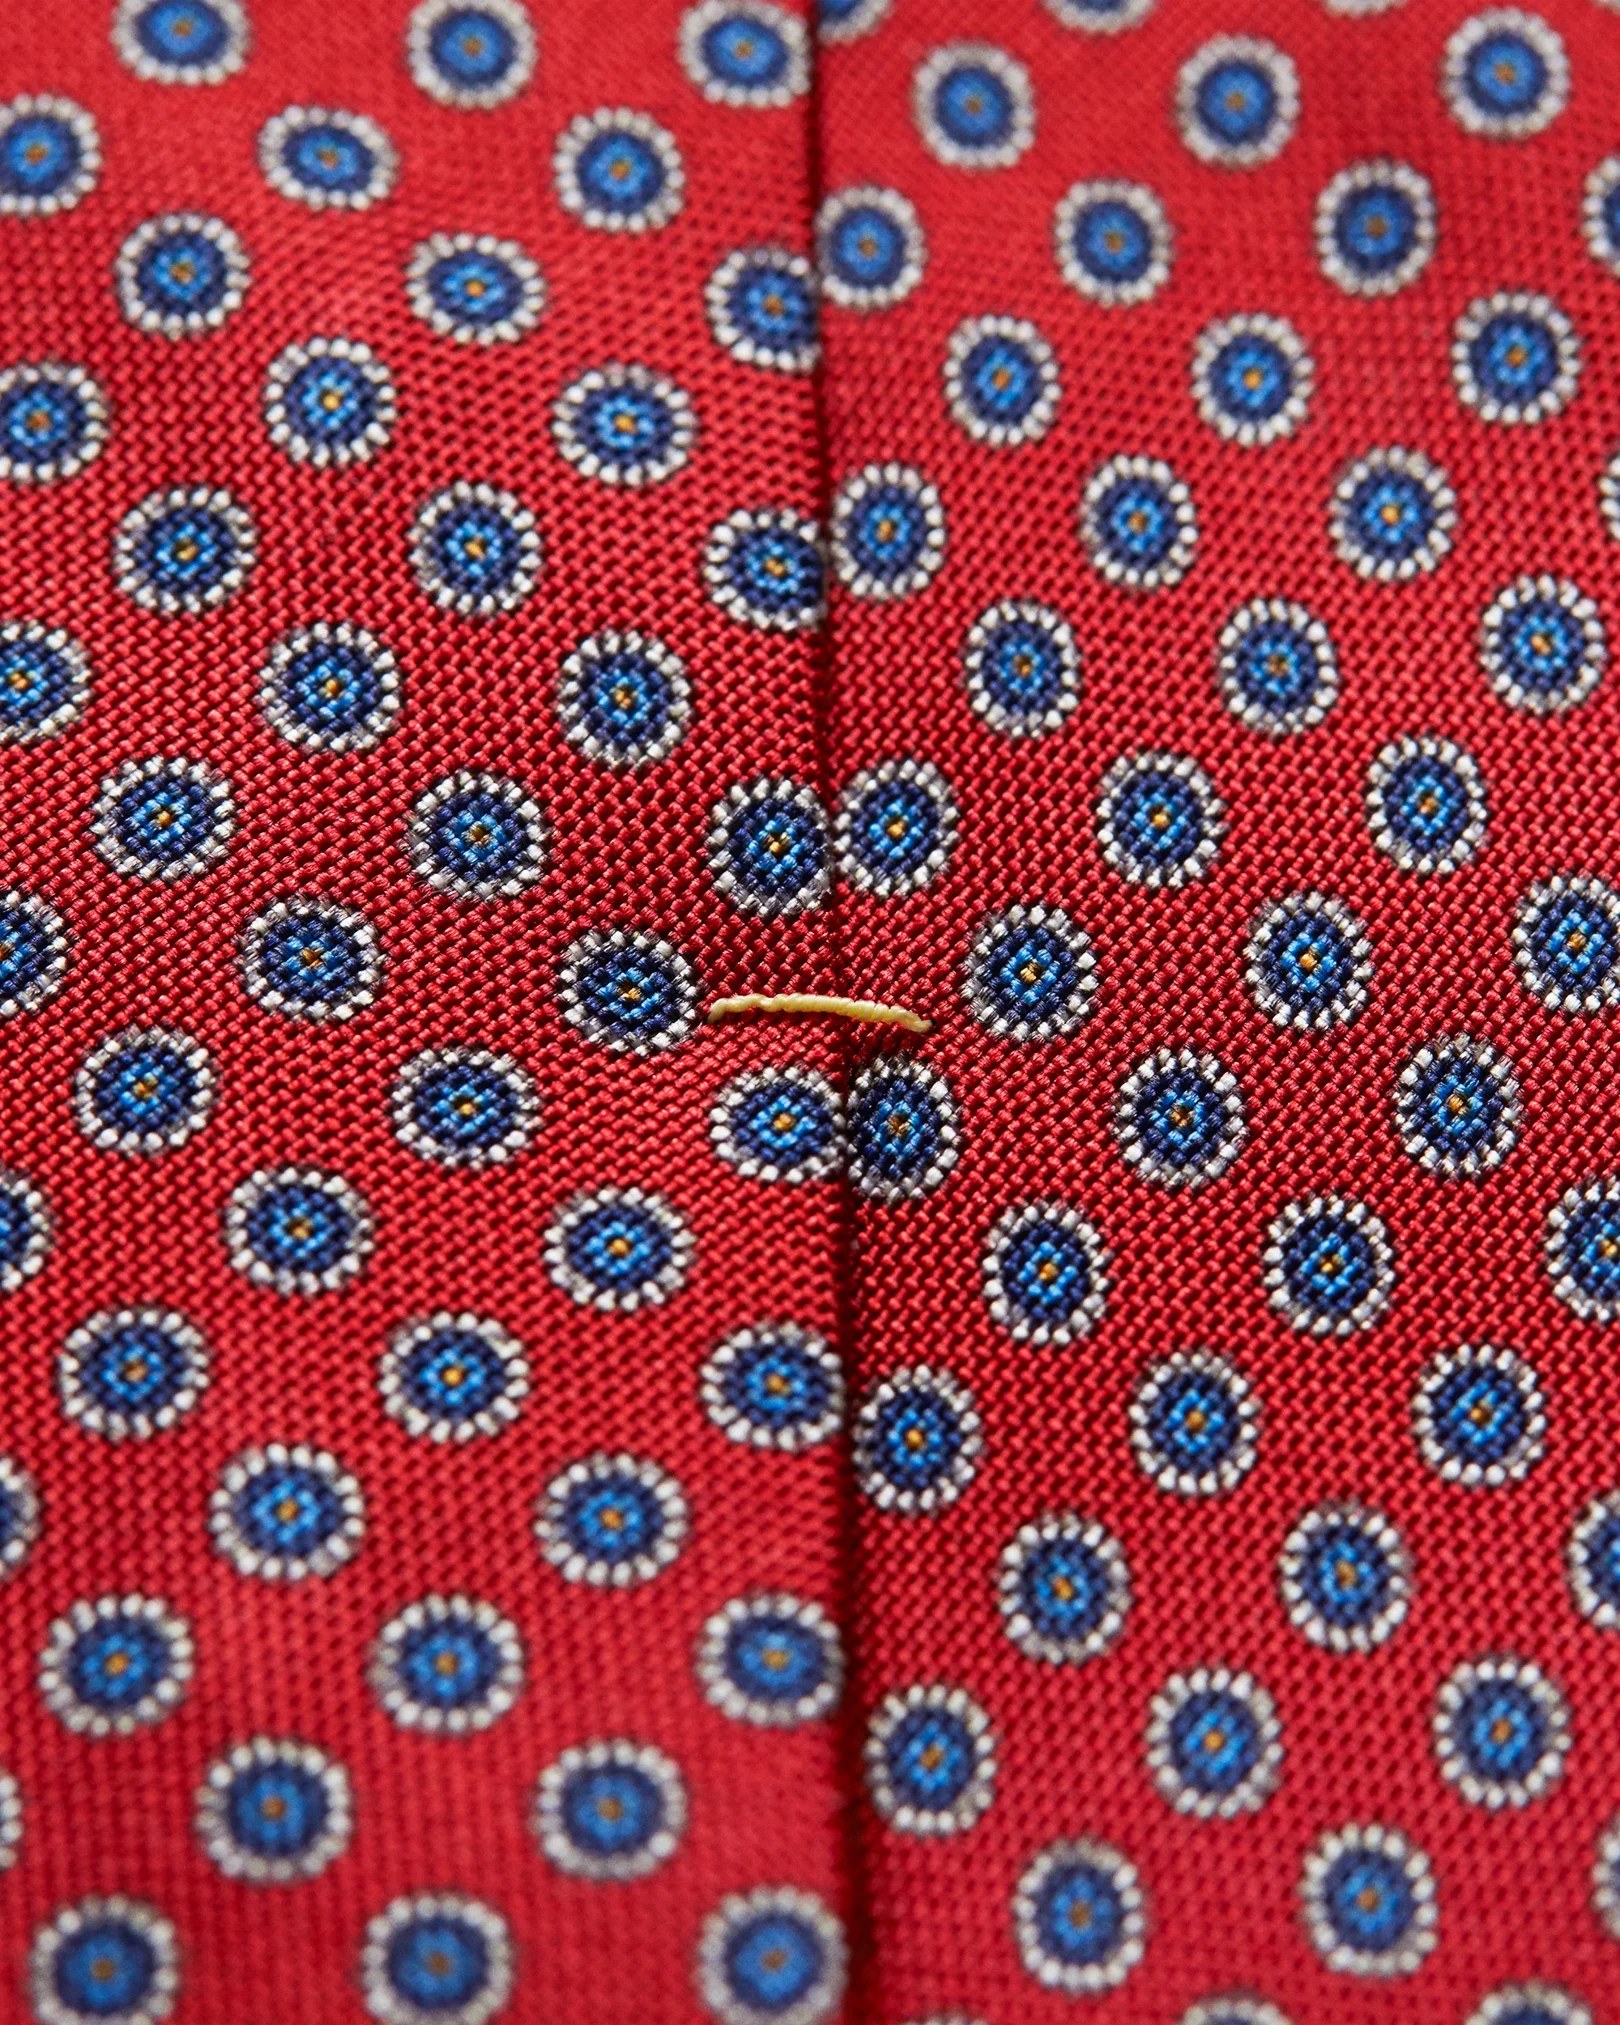 Eton - dark red geometric tie